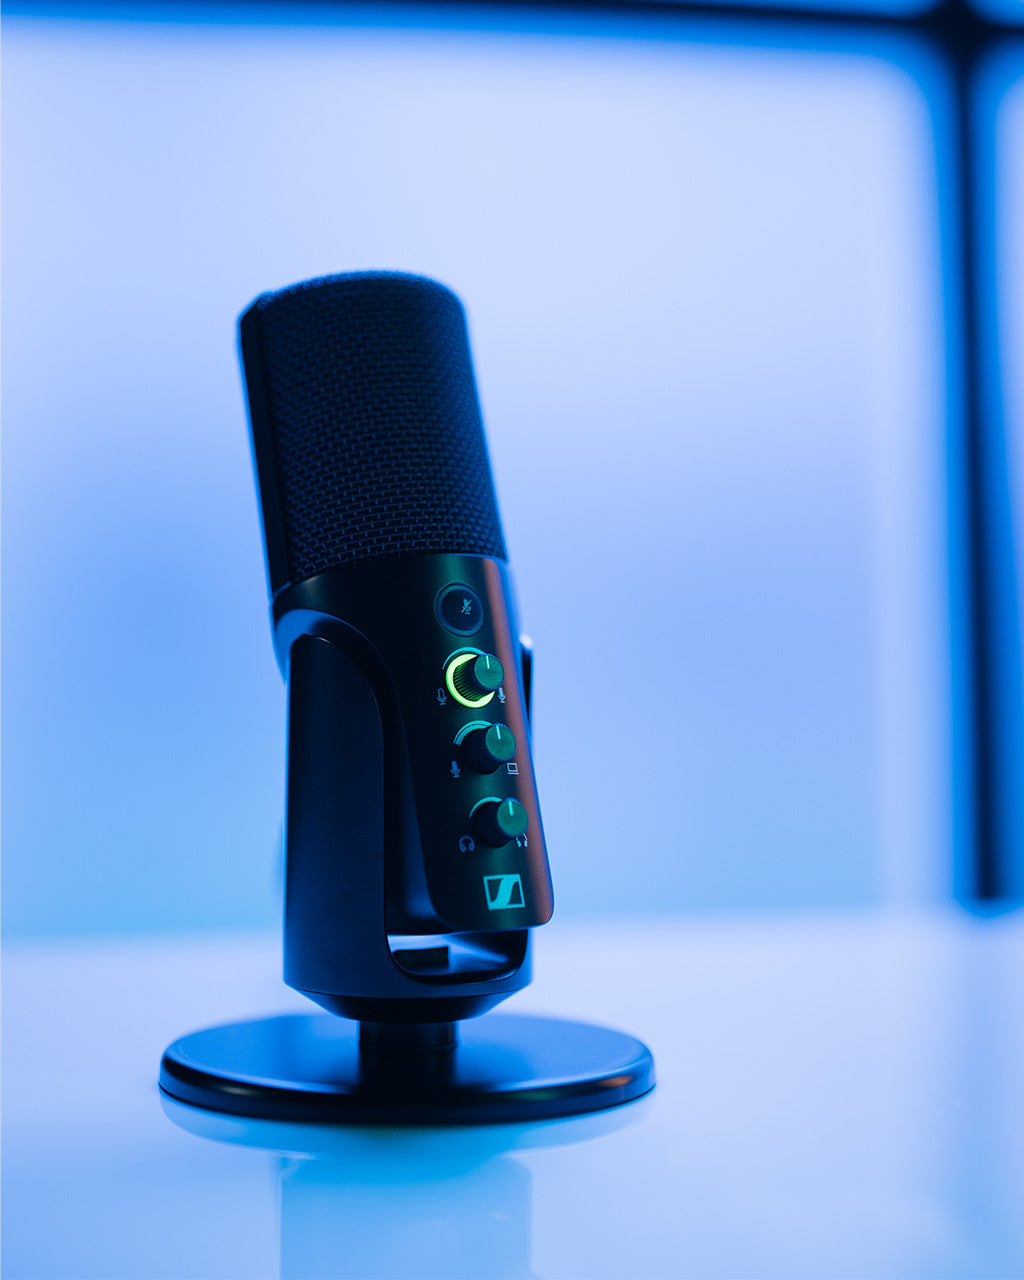 Yeti Pro : Micro USB Blue Microphones - Univers Sons